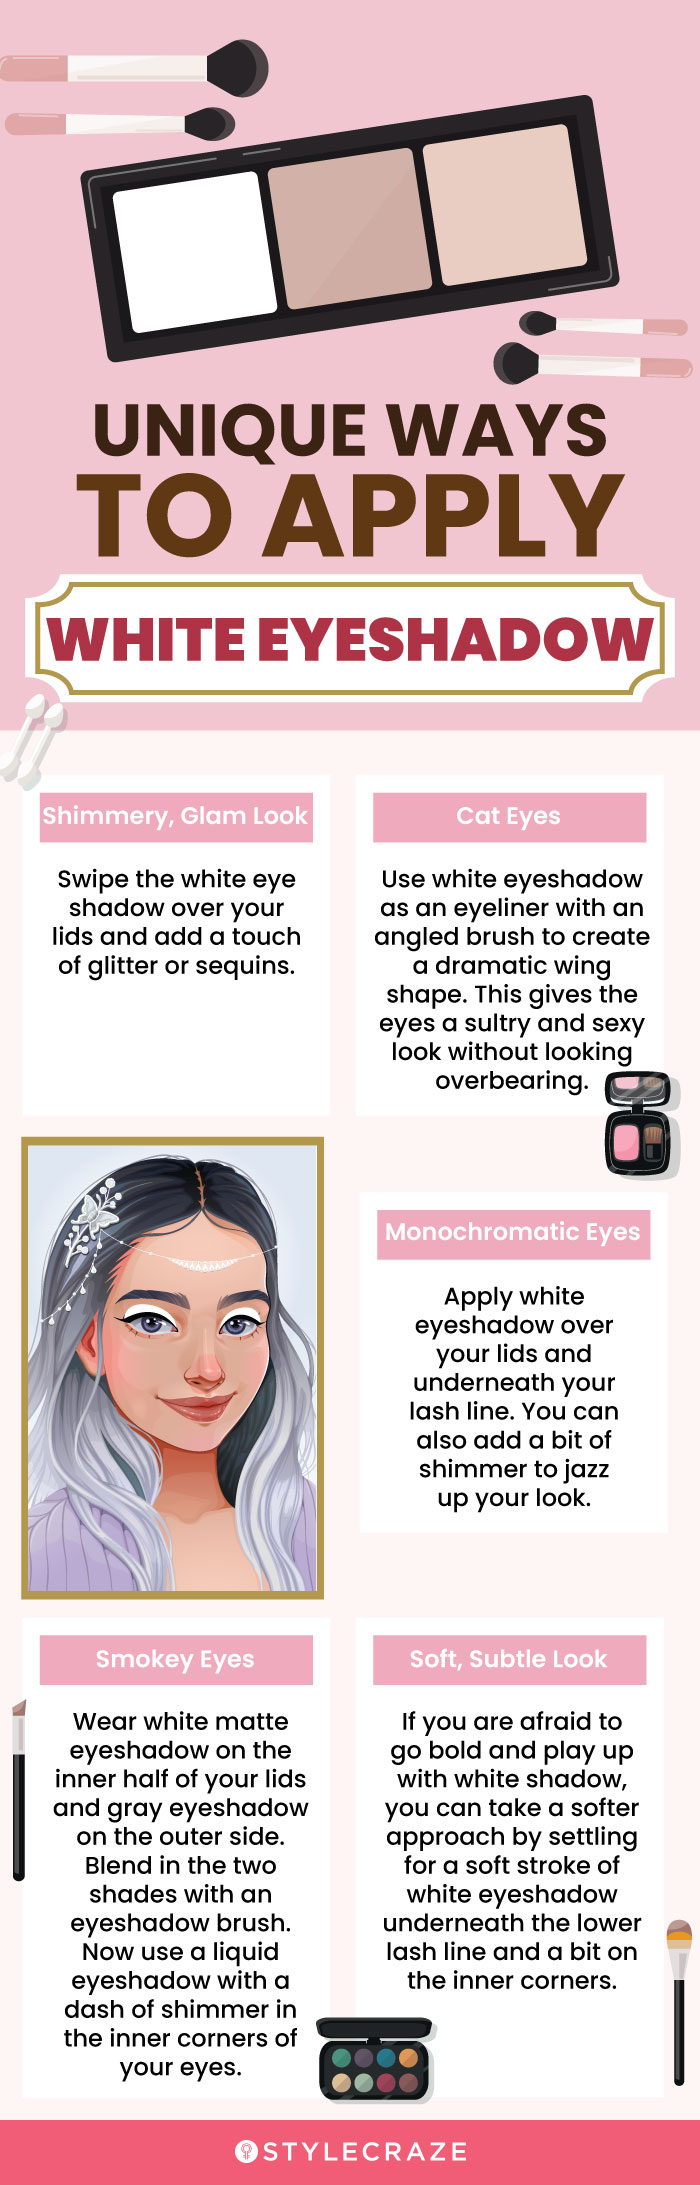 Unique Ways To Apply White Eyeshadow(infographic)